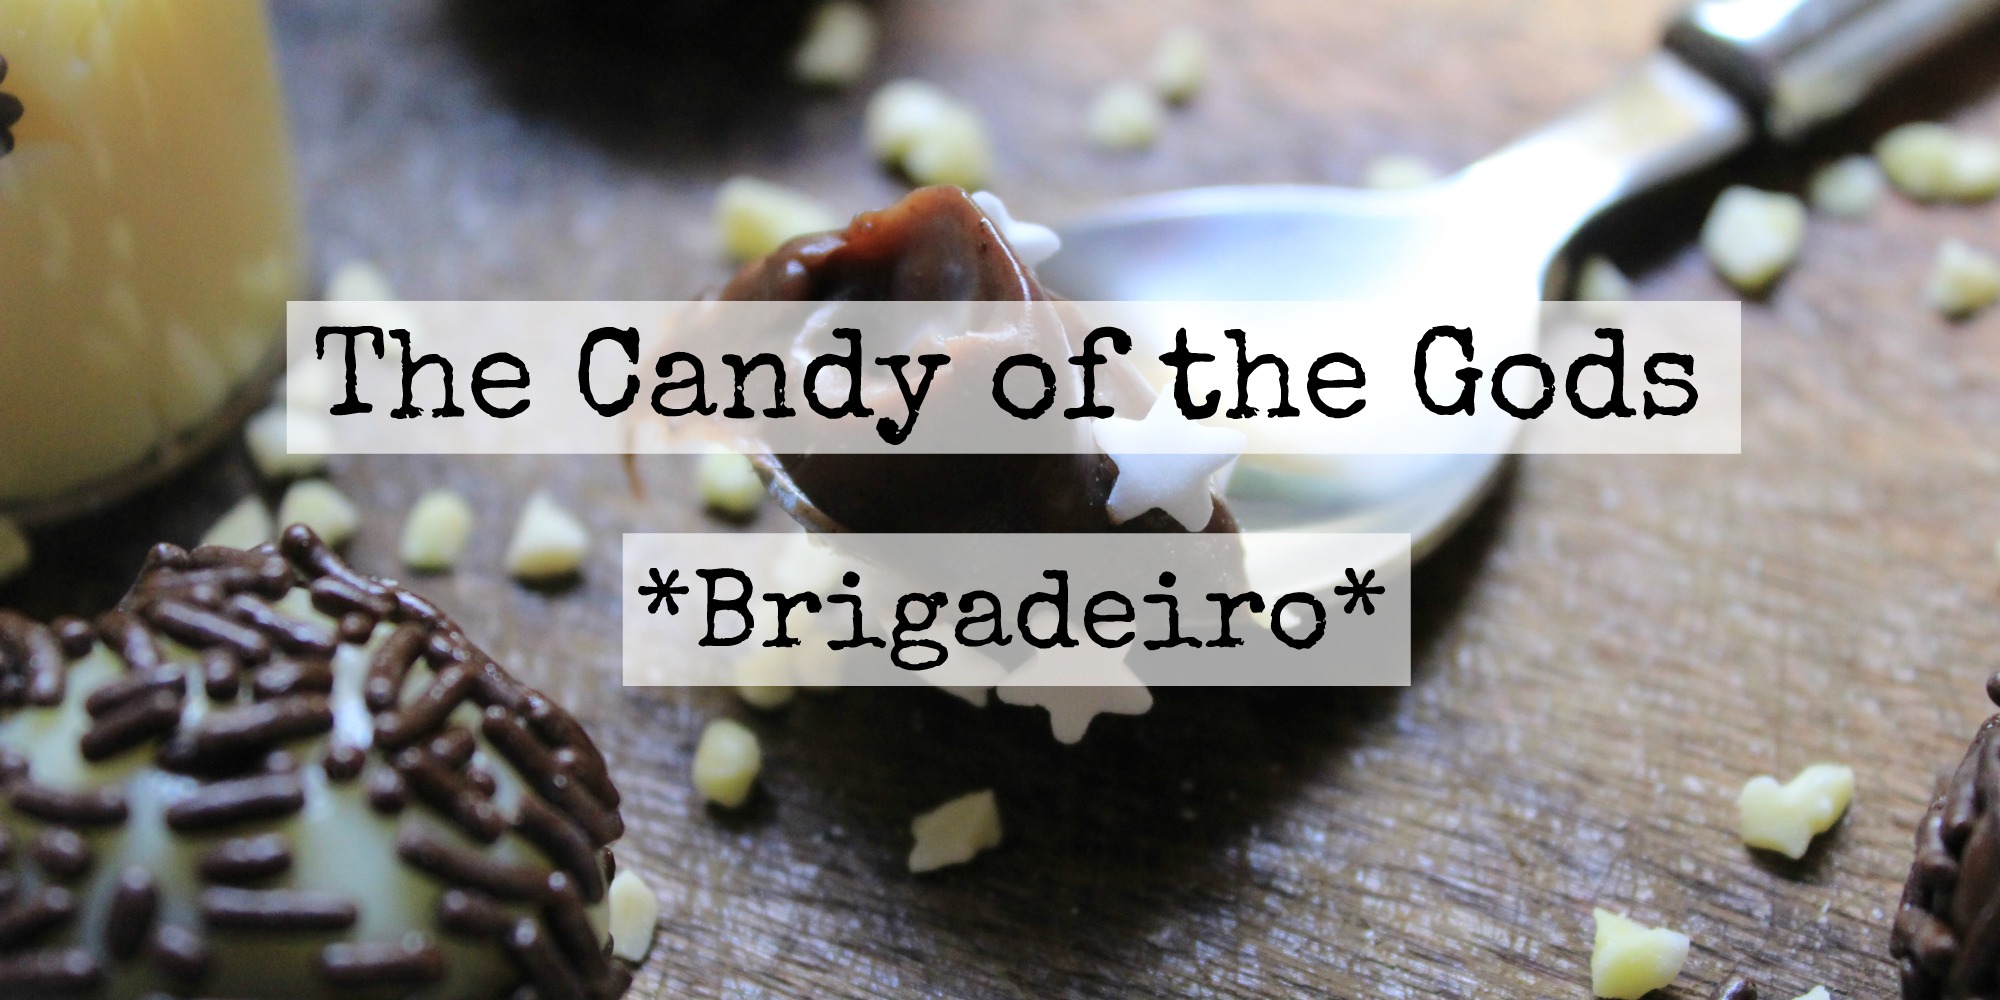 Brigadeiro - the candy of the gods